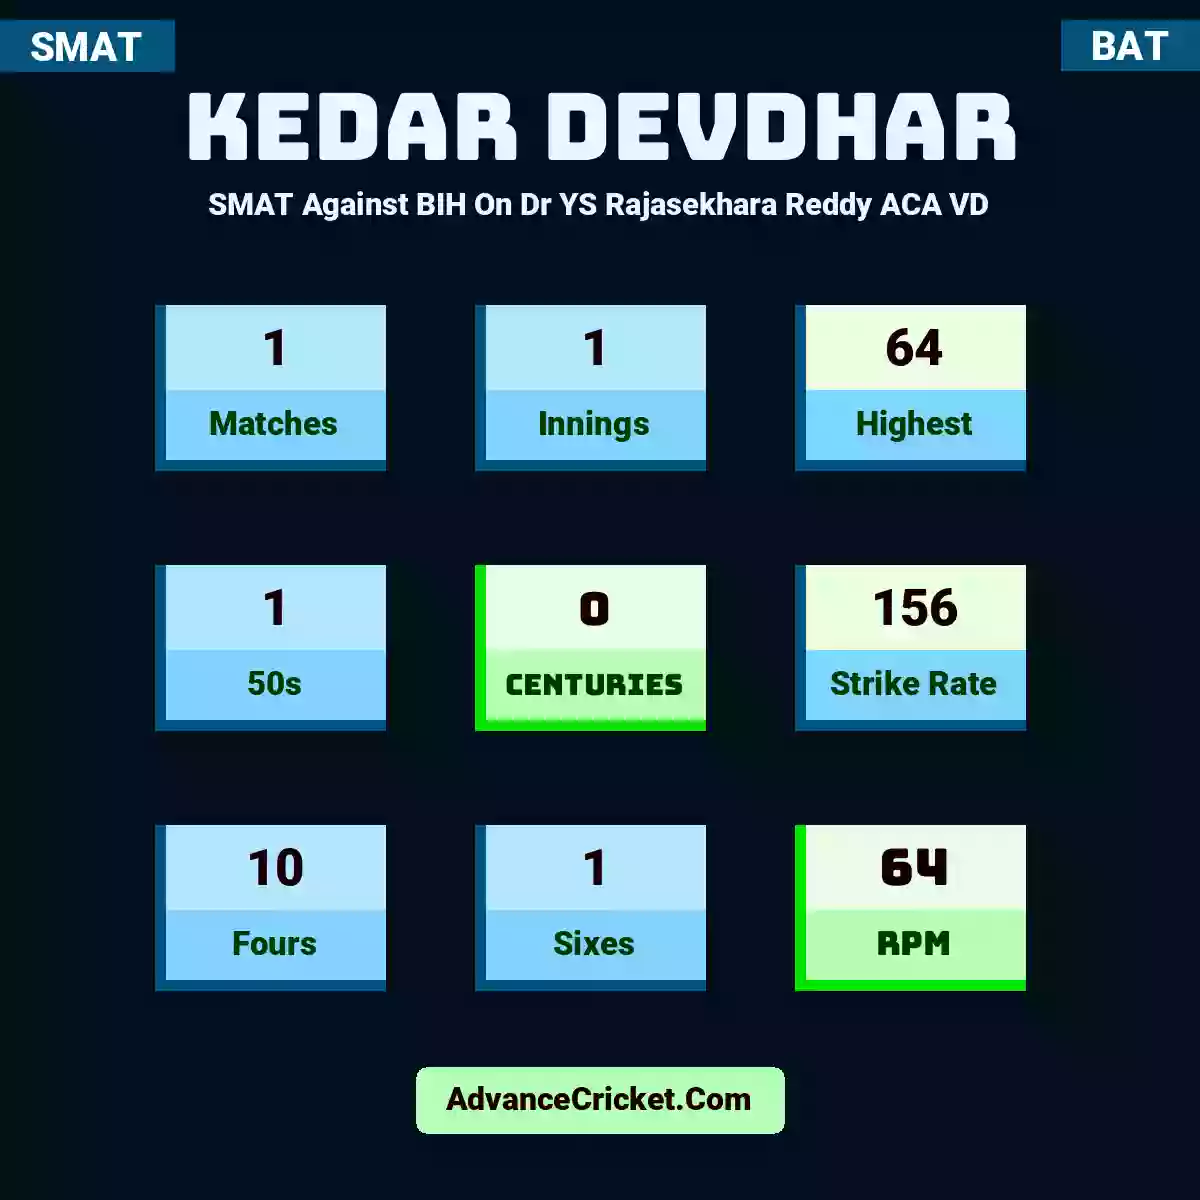 Kedar Devdhar SMAT  Against BIH On Dr YS Rajasekhara Reddy ACA VD, Kedar Devdhar played 1 matches, scored 64 runs as highest, 1 half-centuries, and 0 centuries, with a strike rate of 156. K.Devdhar hit 10 fours and 1 sixes, with an RPM of 64.